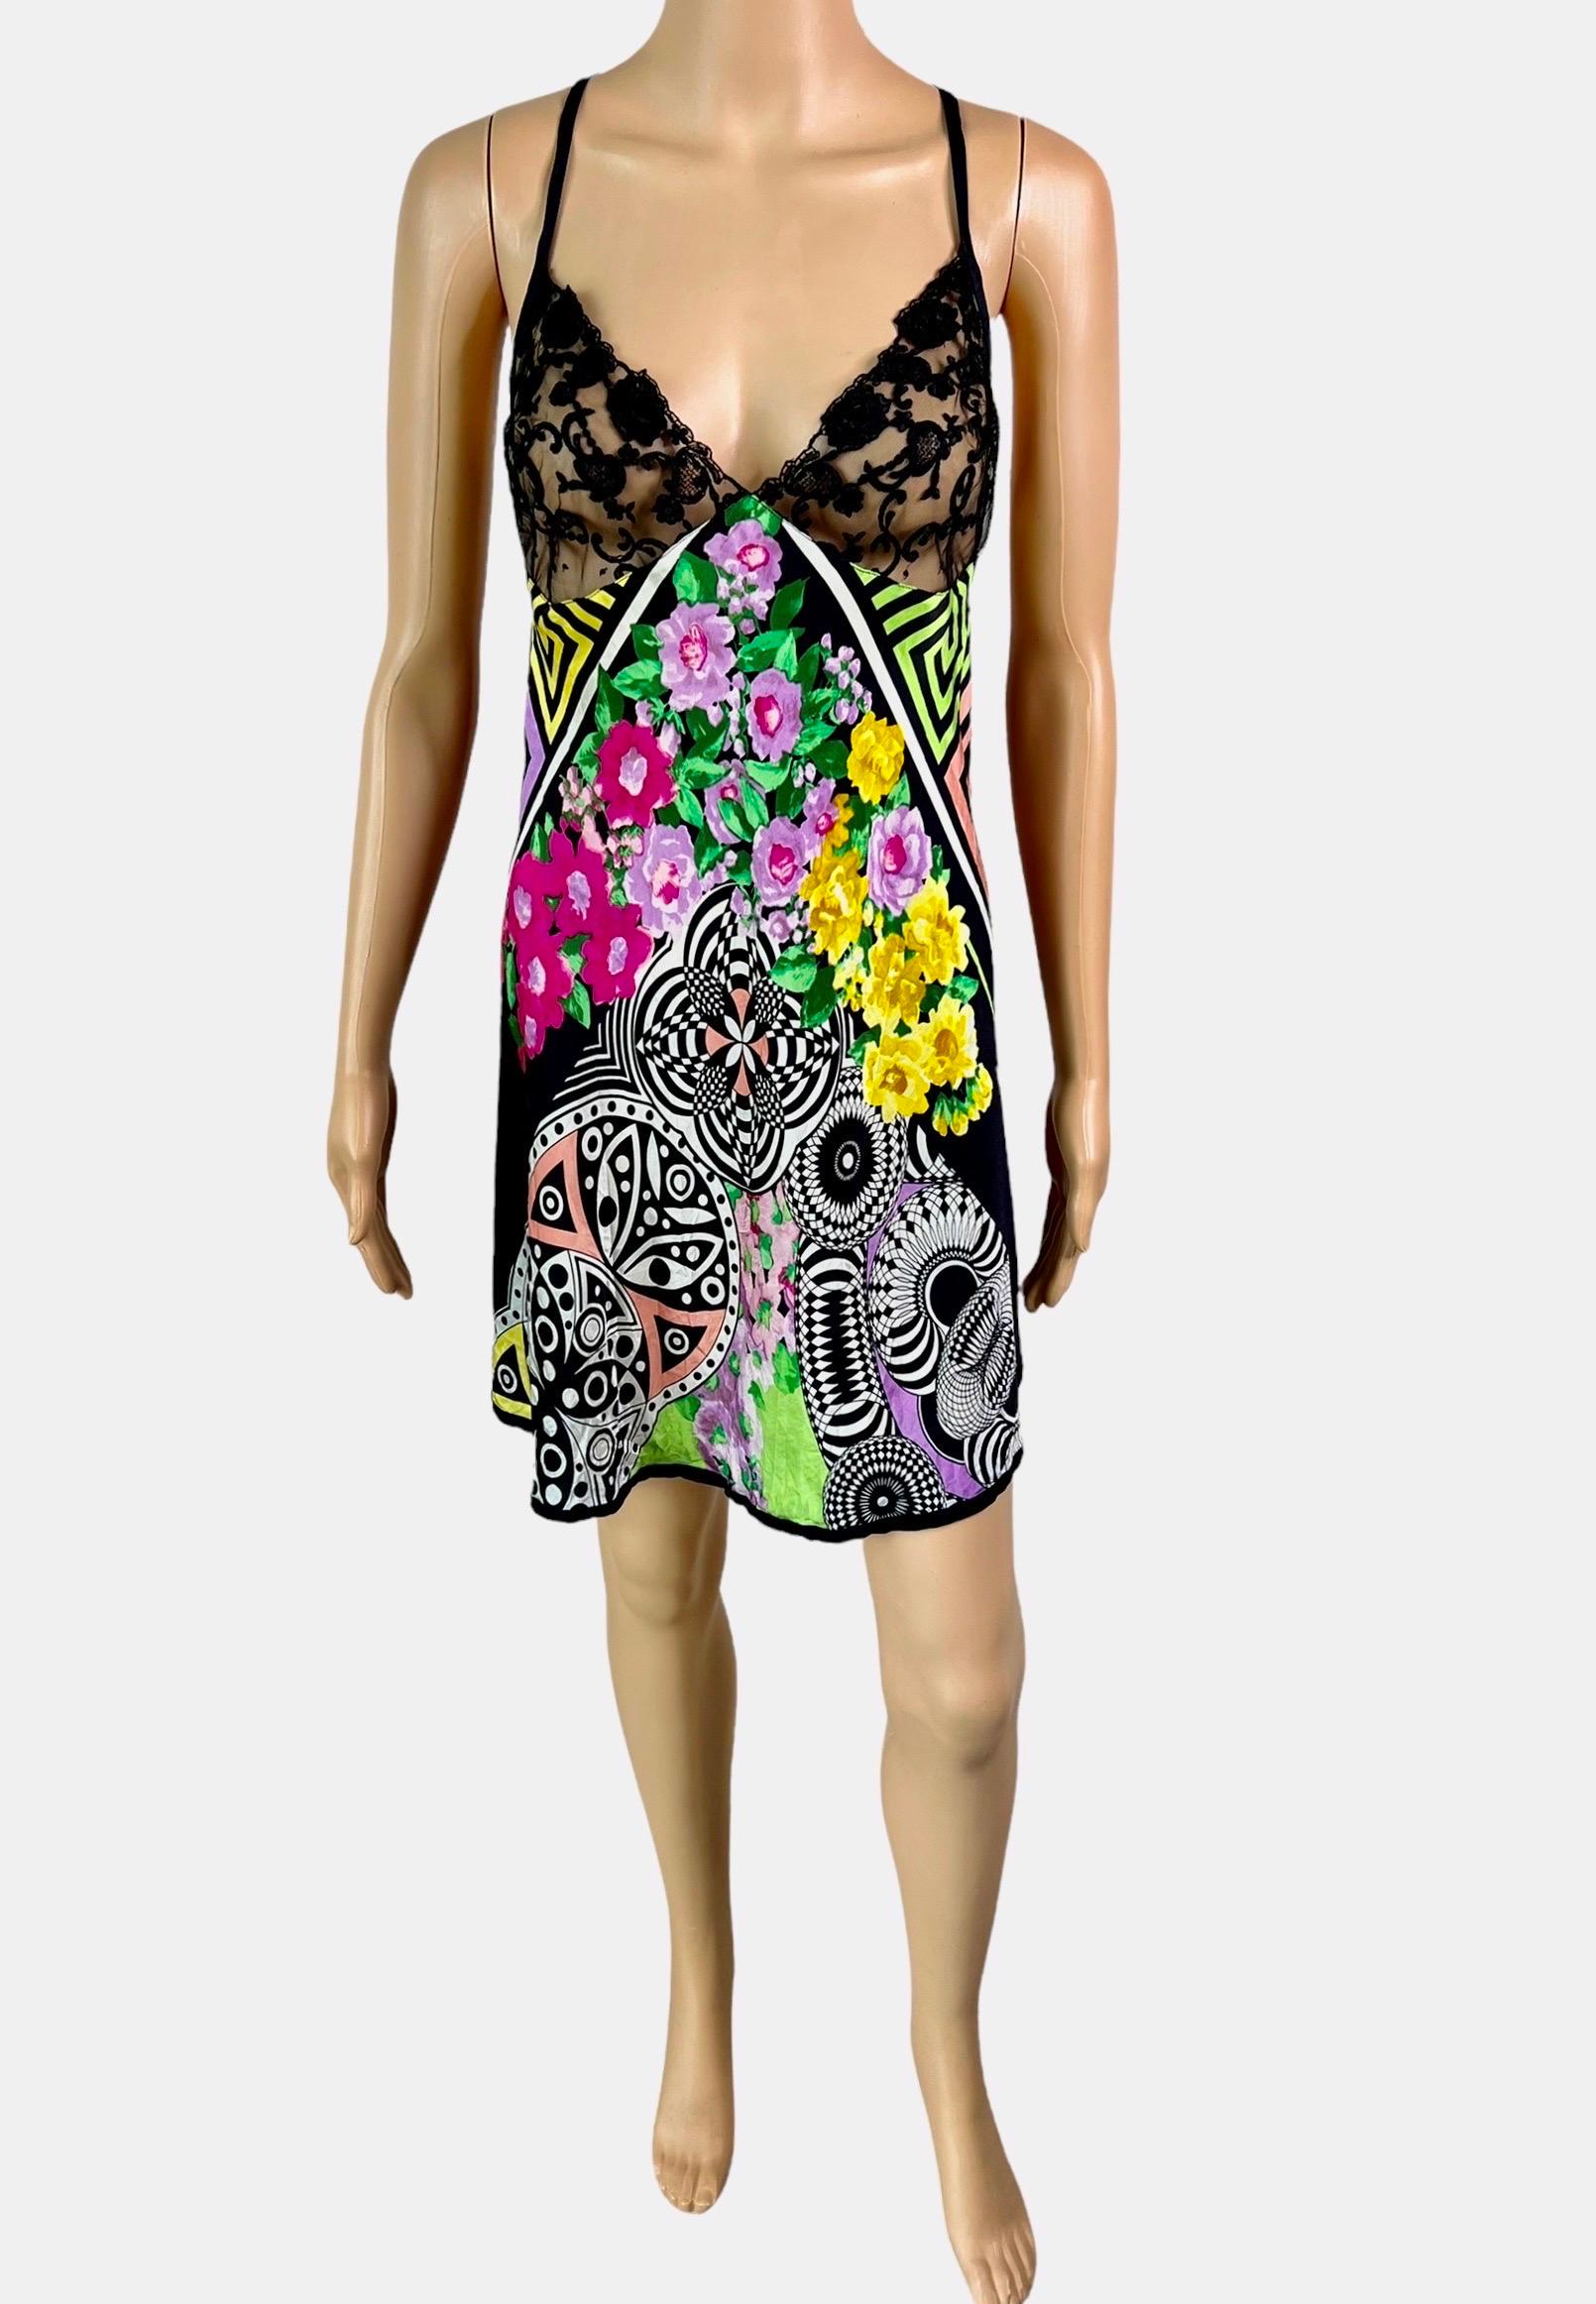 Gianni Versace S/S 1993 Sheer Lace Bra Floral Print Slip Silk Mini Dress For Sale 6